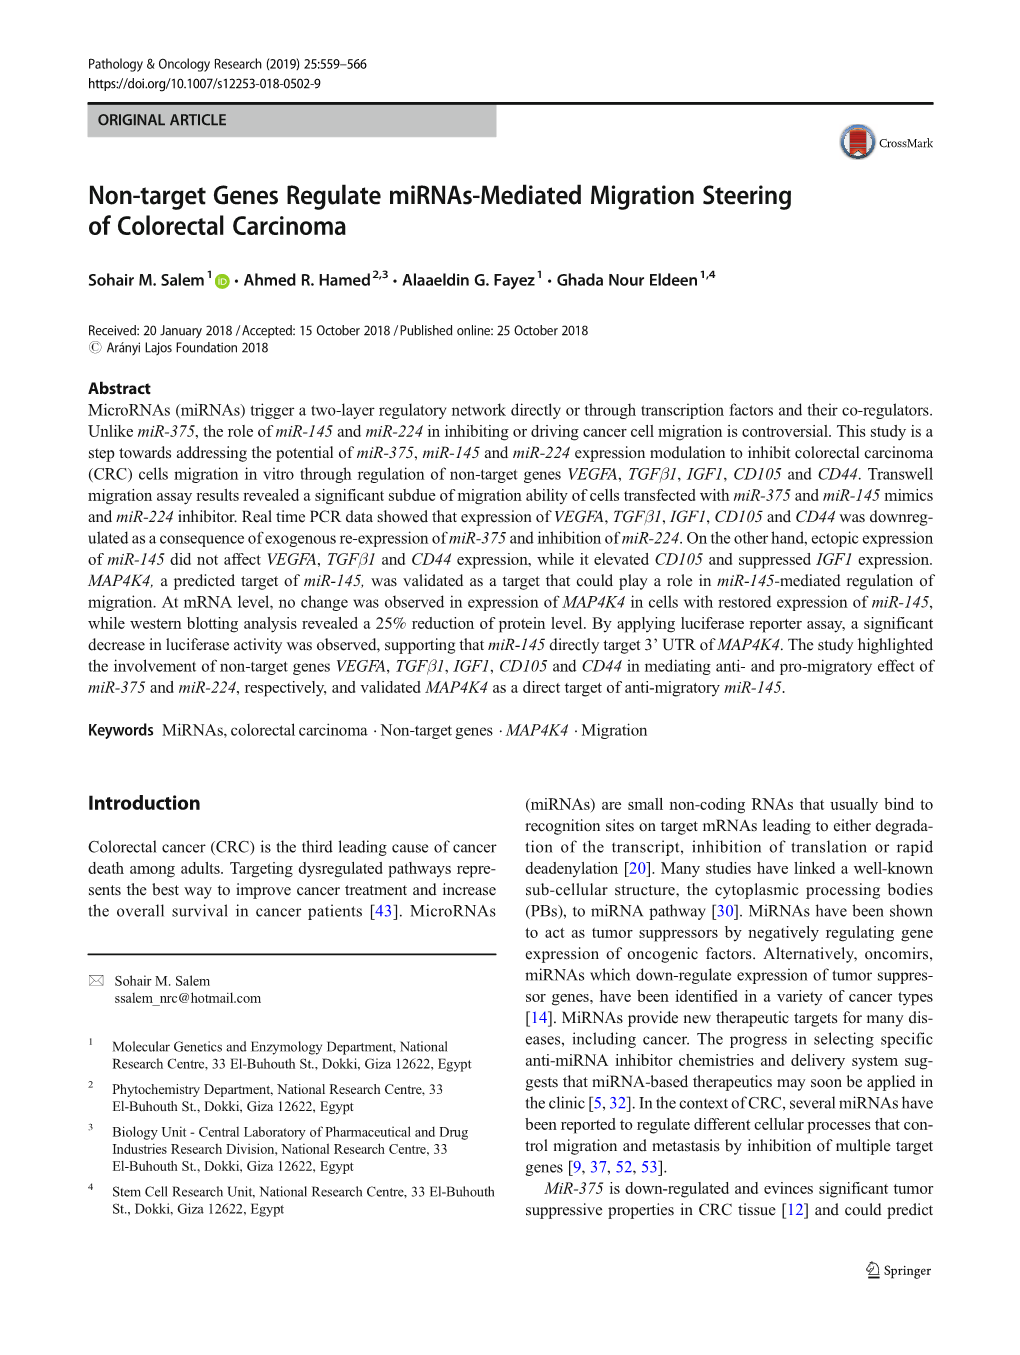 Non-Target Genes Regulate Mirnas-Mediated Migration Steering of Colorectal Carcinoma